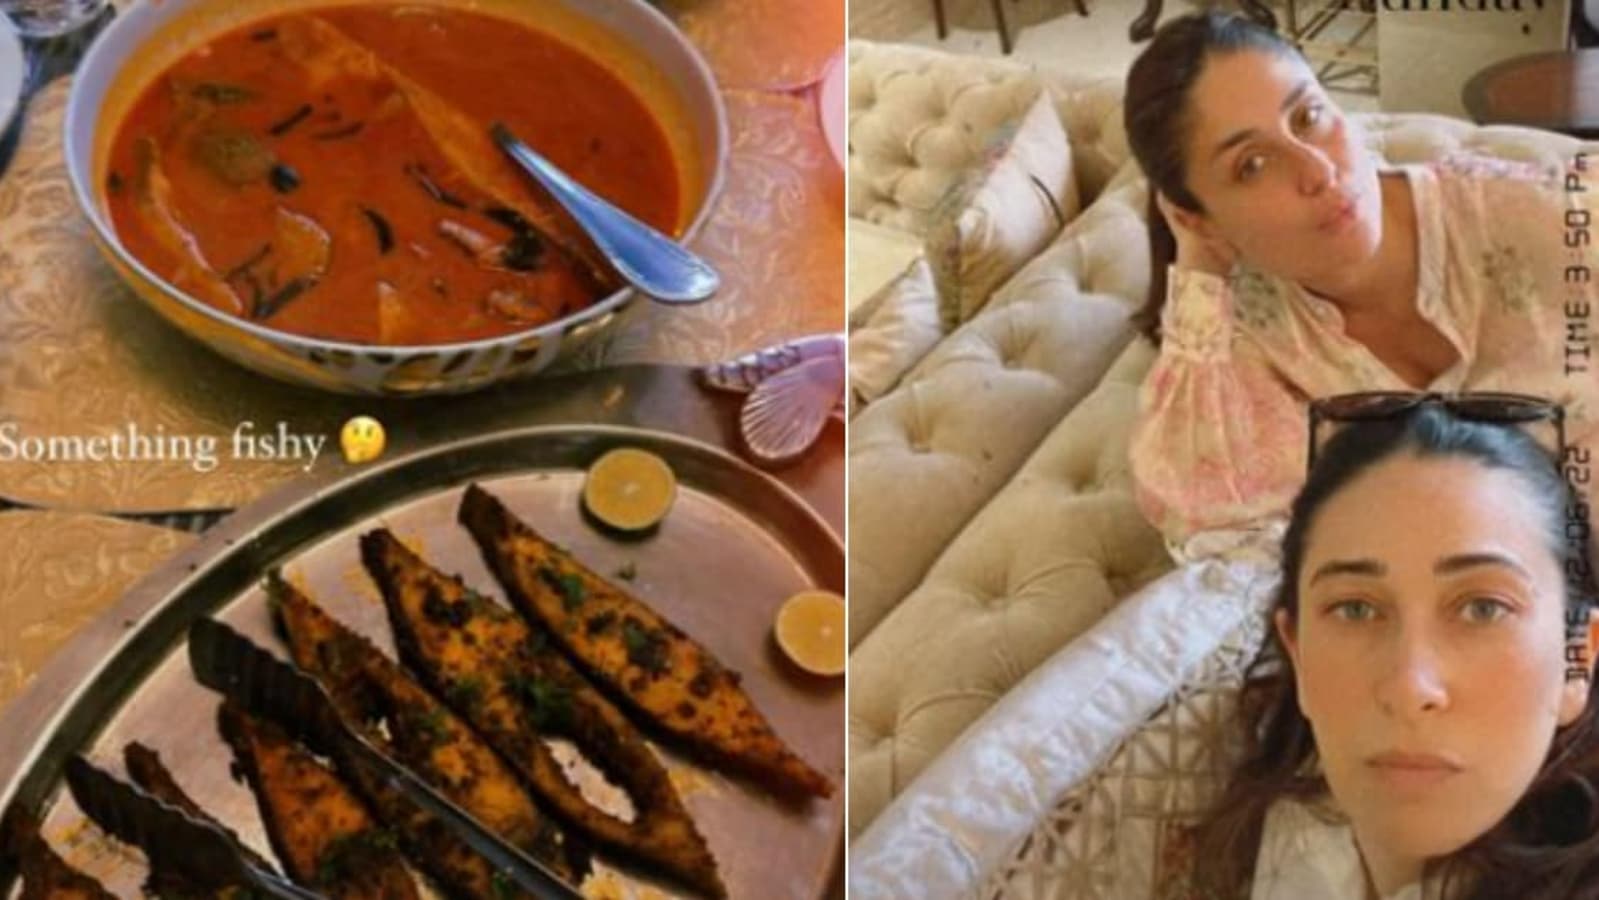 Kareena Kapoor relish fish delicacy with sis Karisma Kapoor, their BFF Amrita Arora: ‘Yummy in my Sunday tummy’